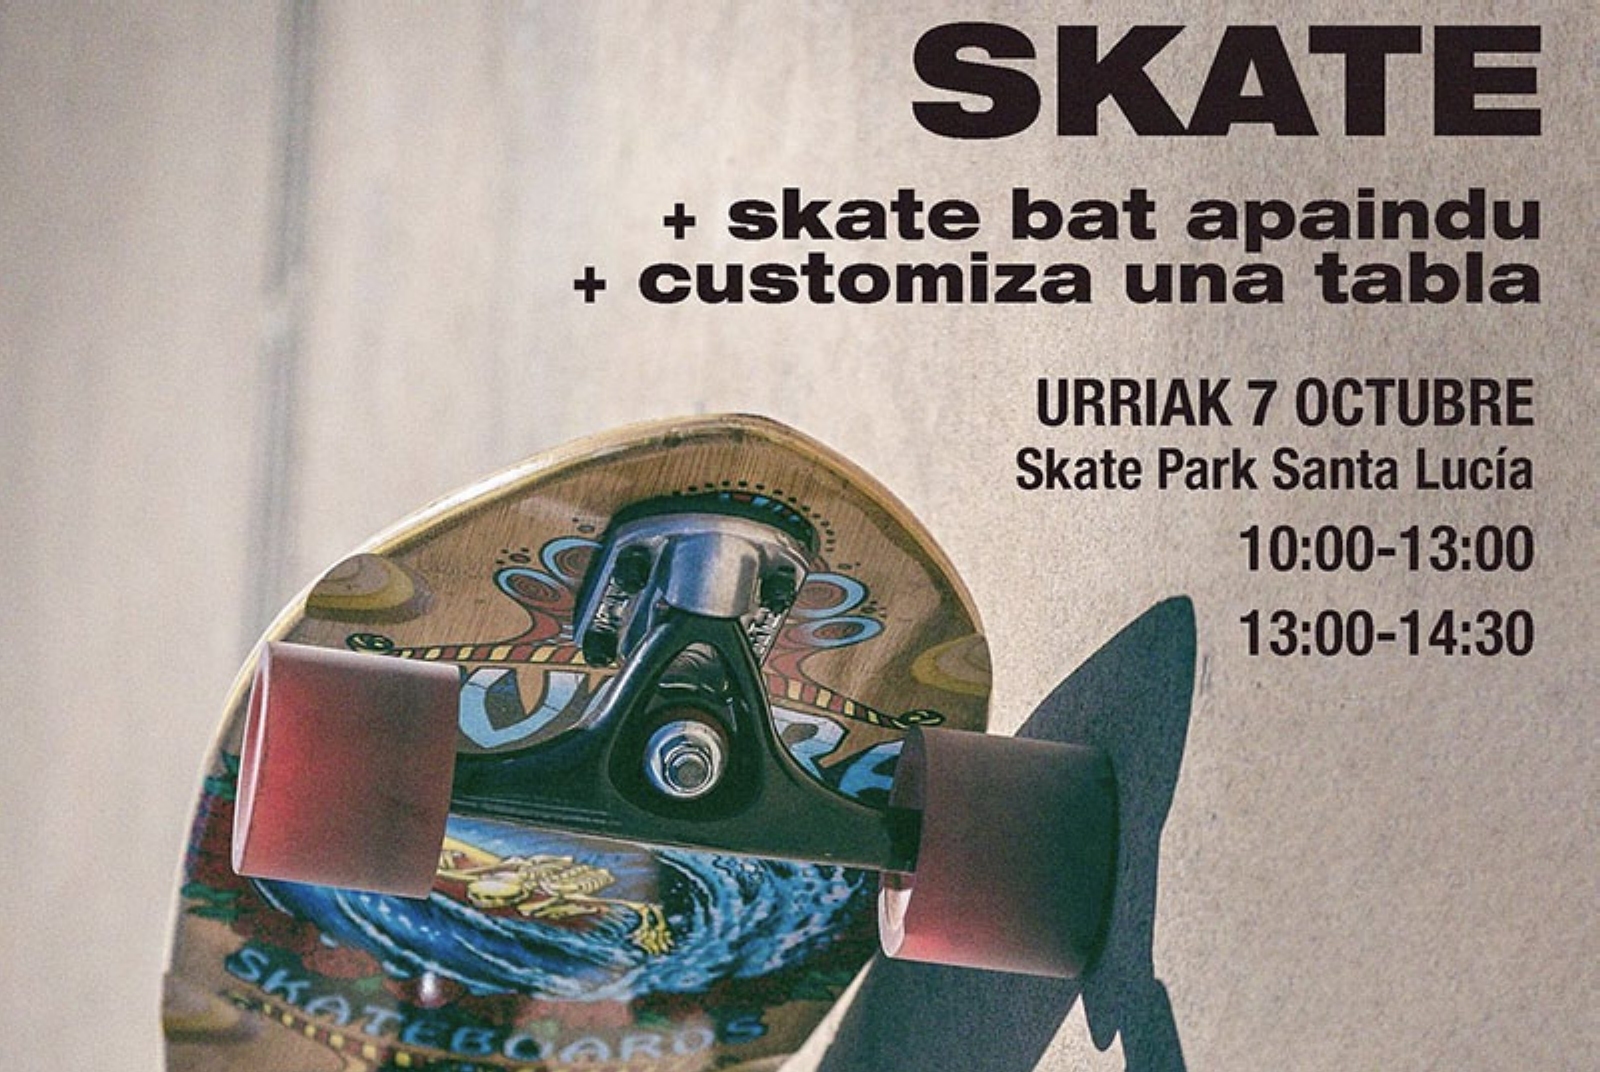 Evento en el Skatepark Santa Lucia (Vitoria-Gasteiz)